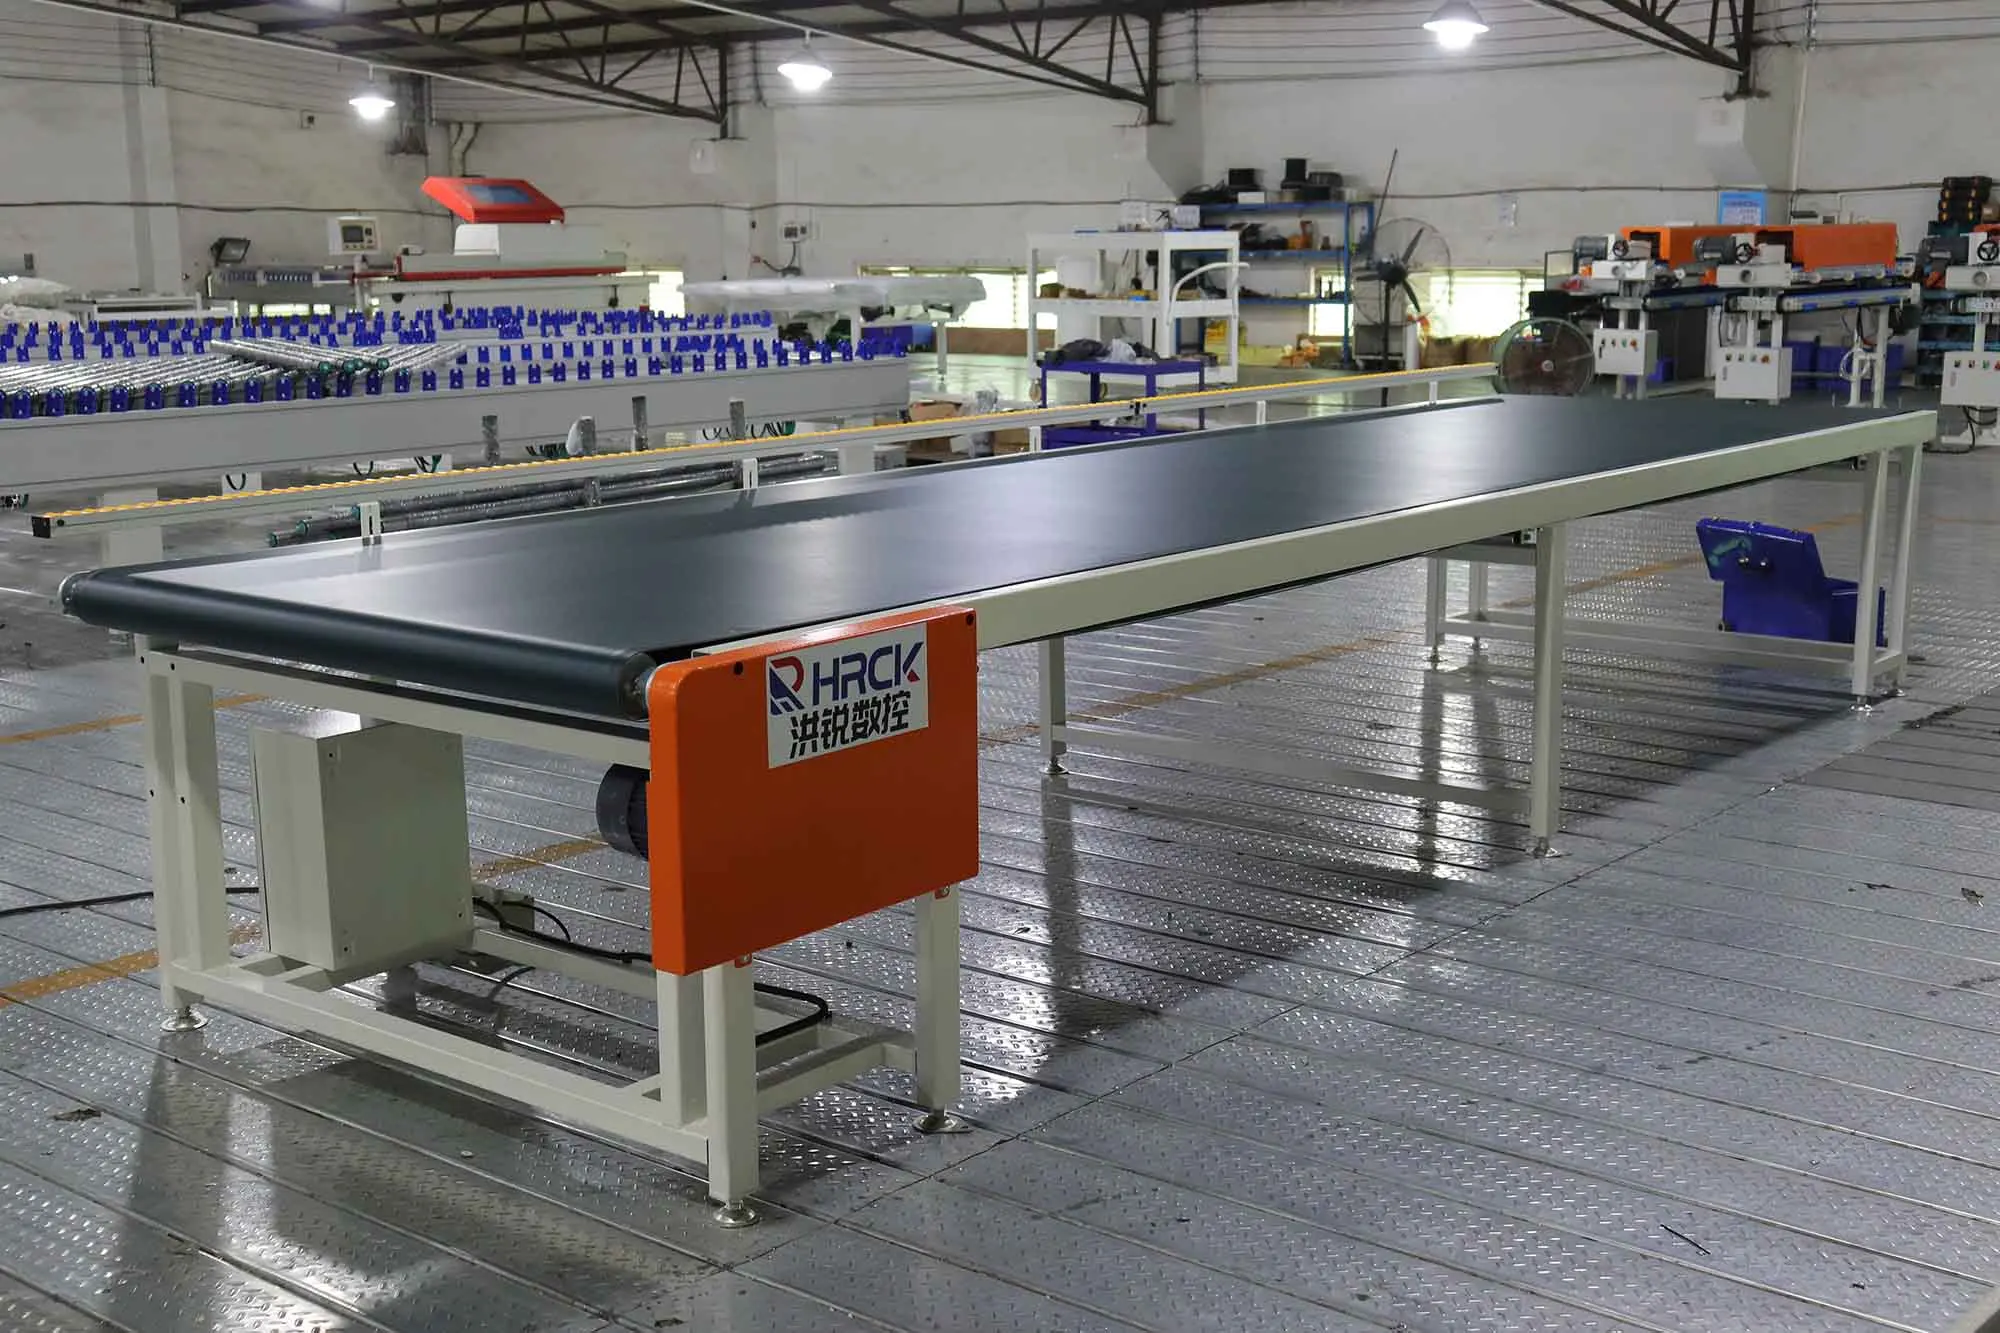 Belt Conveyor Heavy Duty Stainless Steel Motorized Belt Conveyor For Inkjet Coding Applications Powered Rubber manufacture